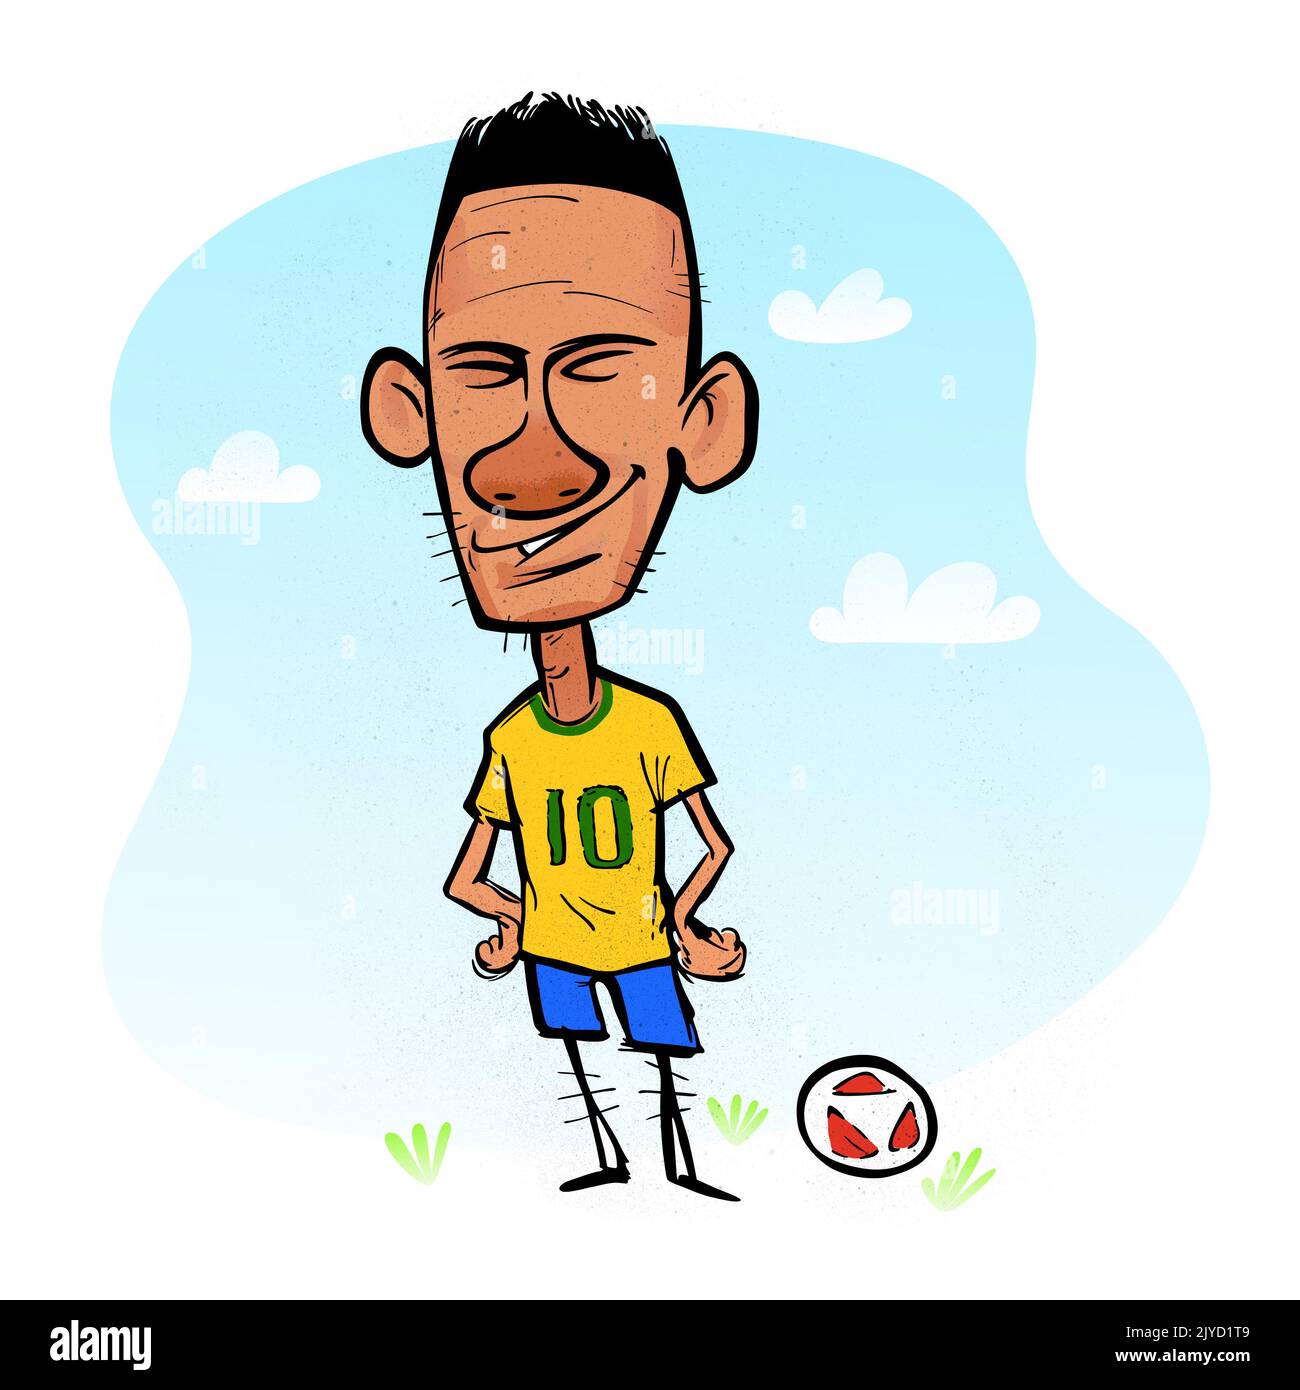 Cartoon caricature image of Brazilian professional footballer Neymar (Neymar da Silva Santos Júnior) in Brazil national team jersey Stock Photo